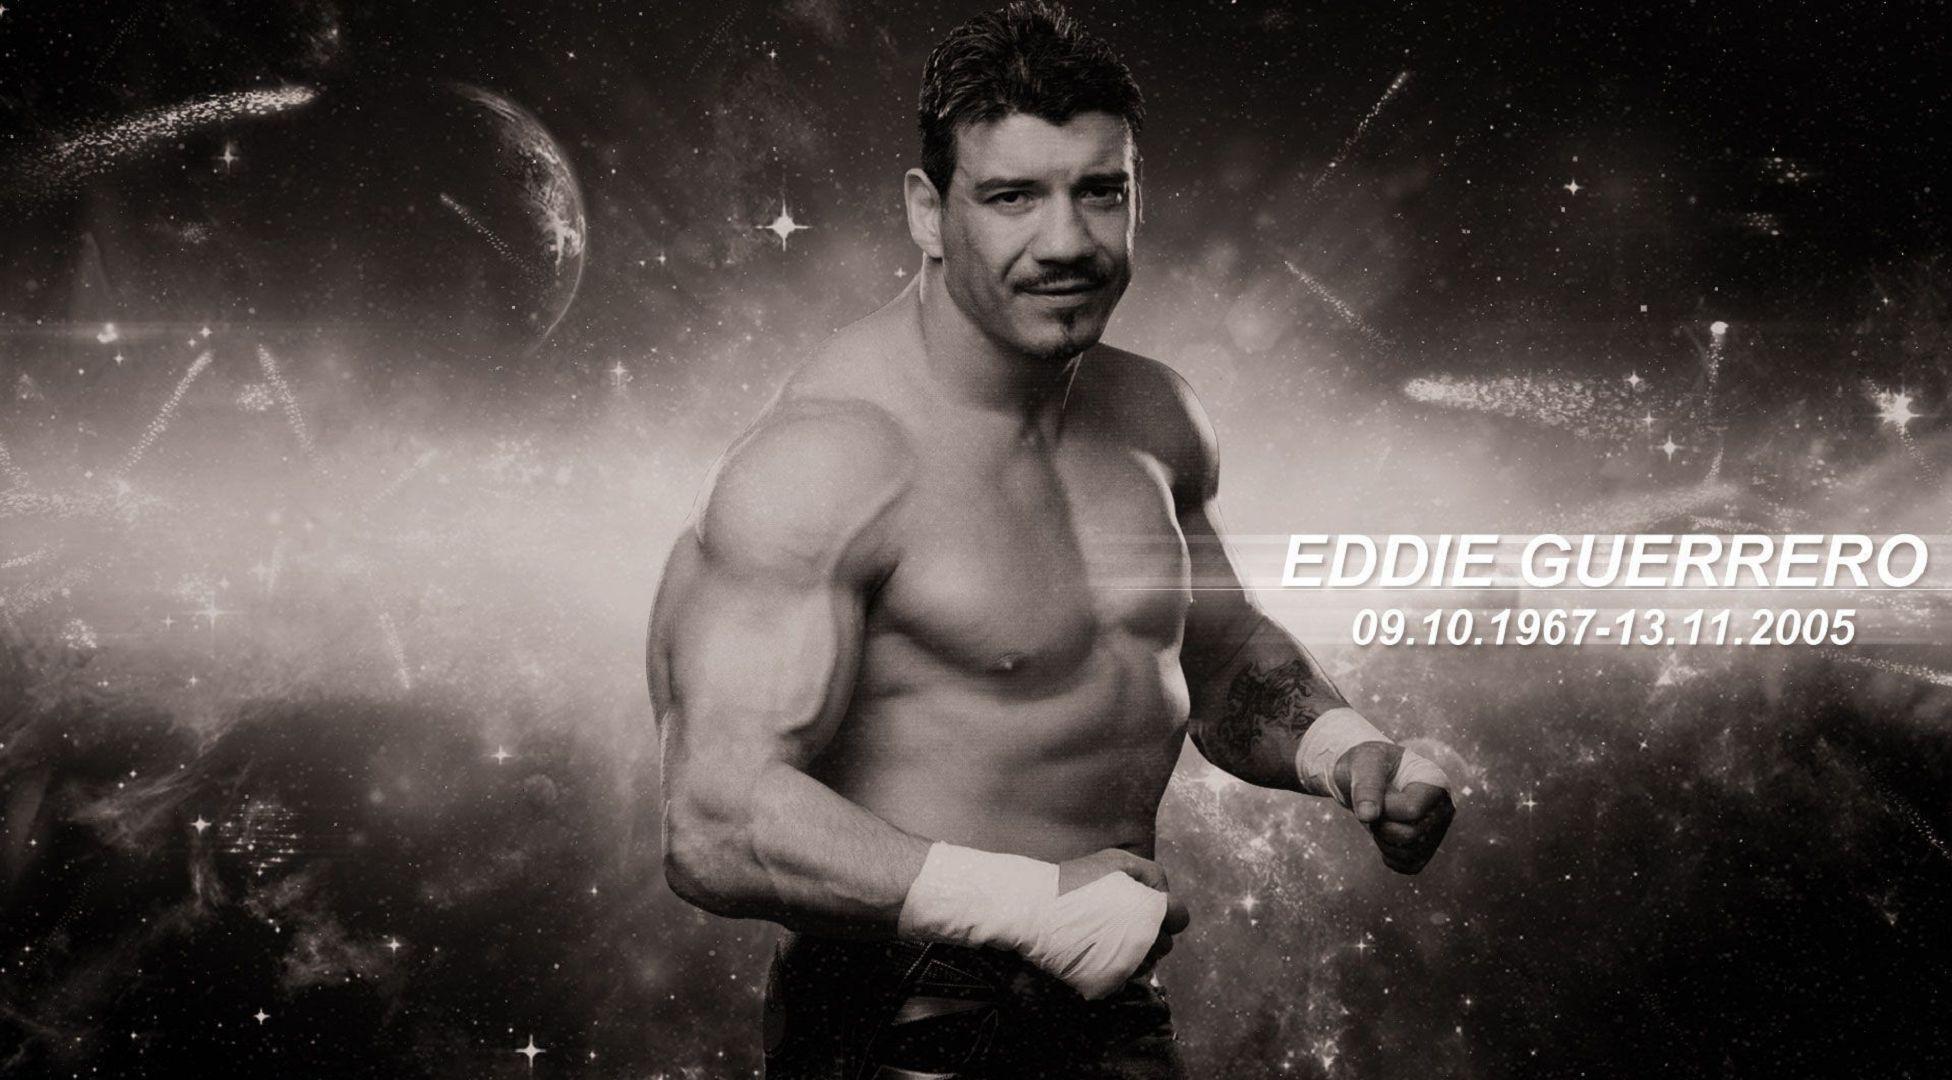 Eddie Guerrero Free HD Wallpaper Image Background